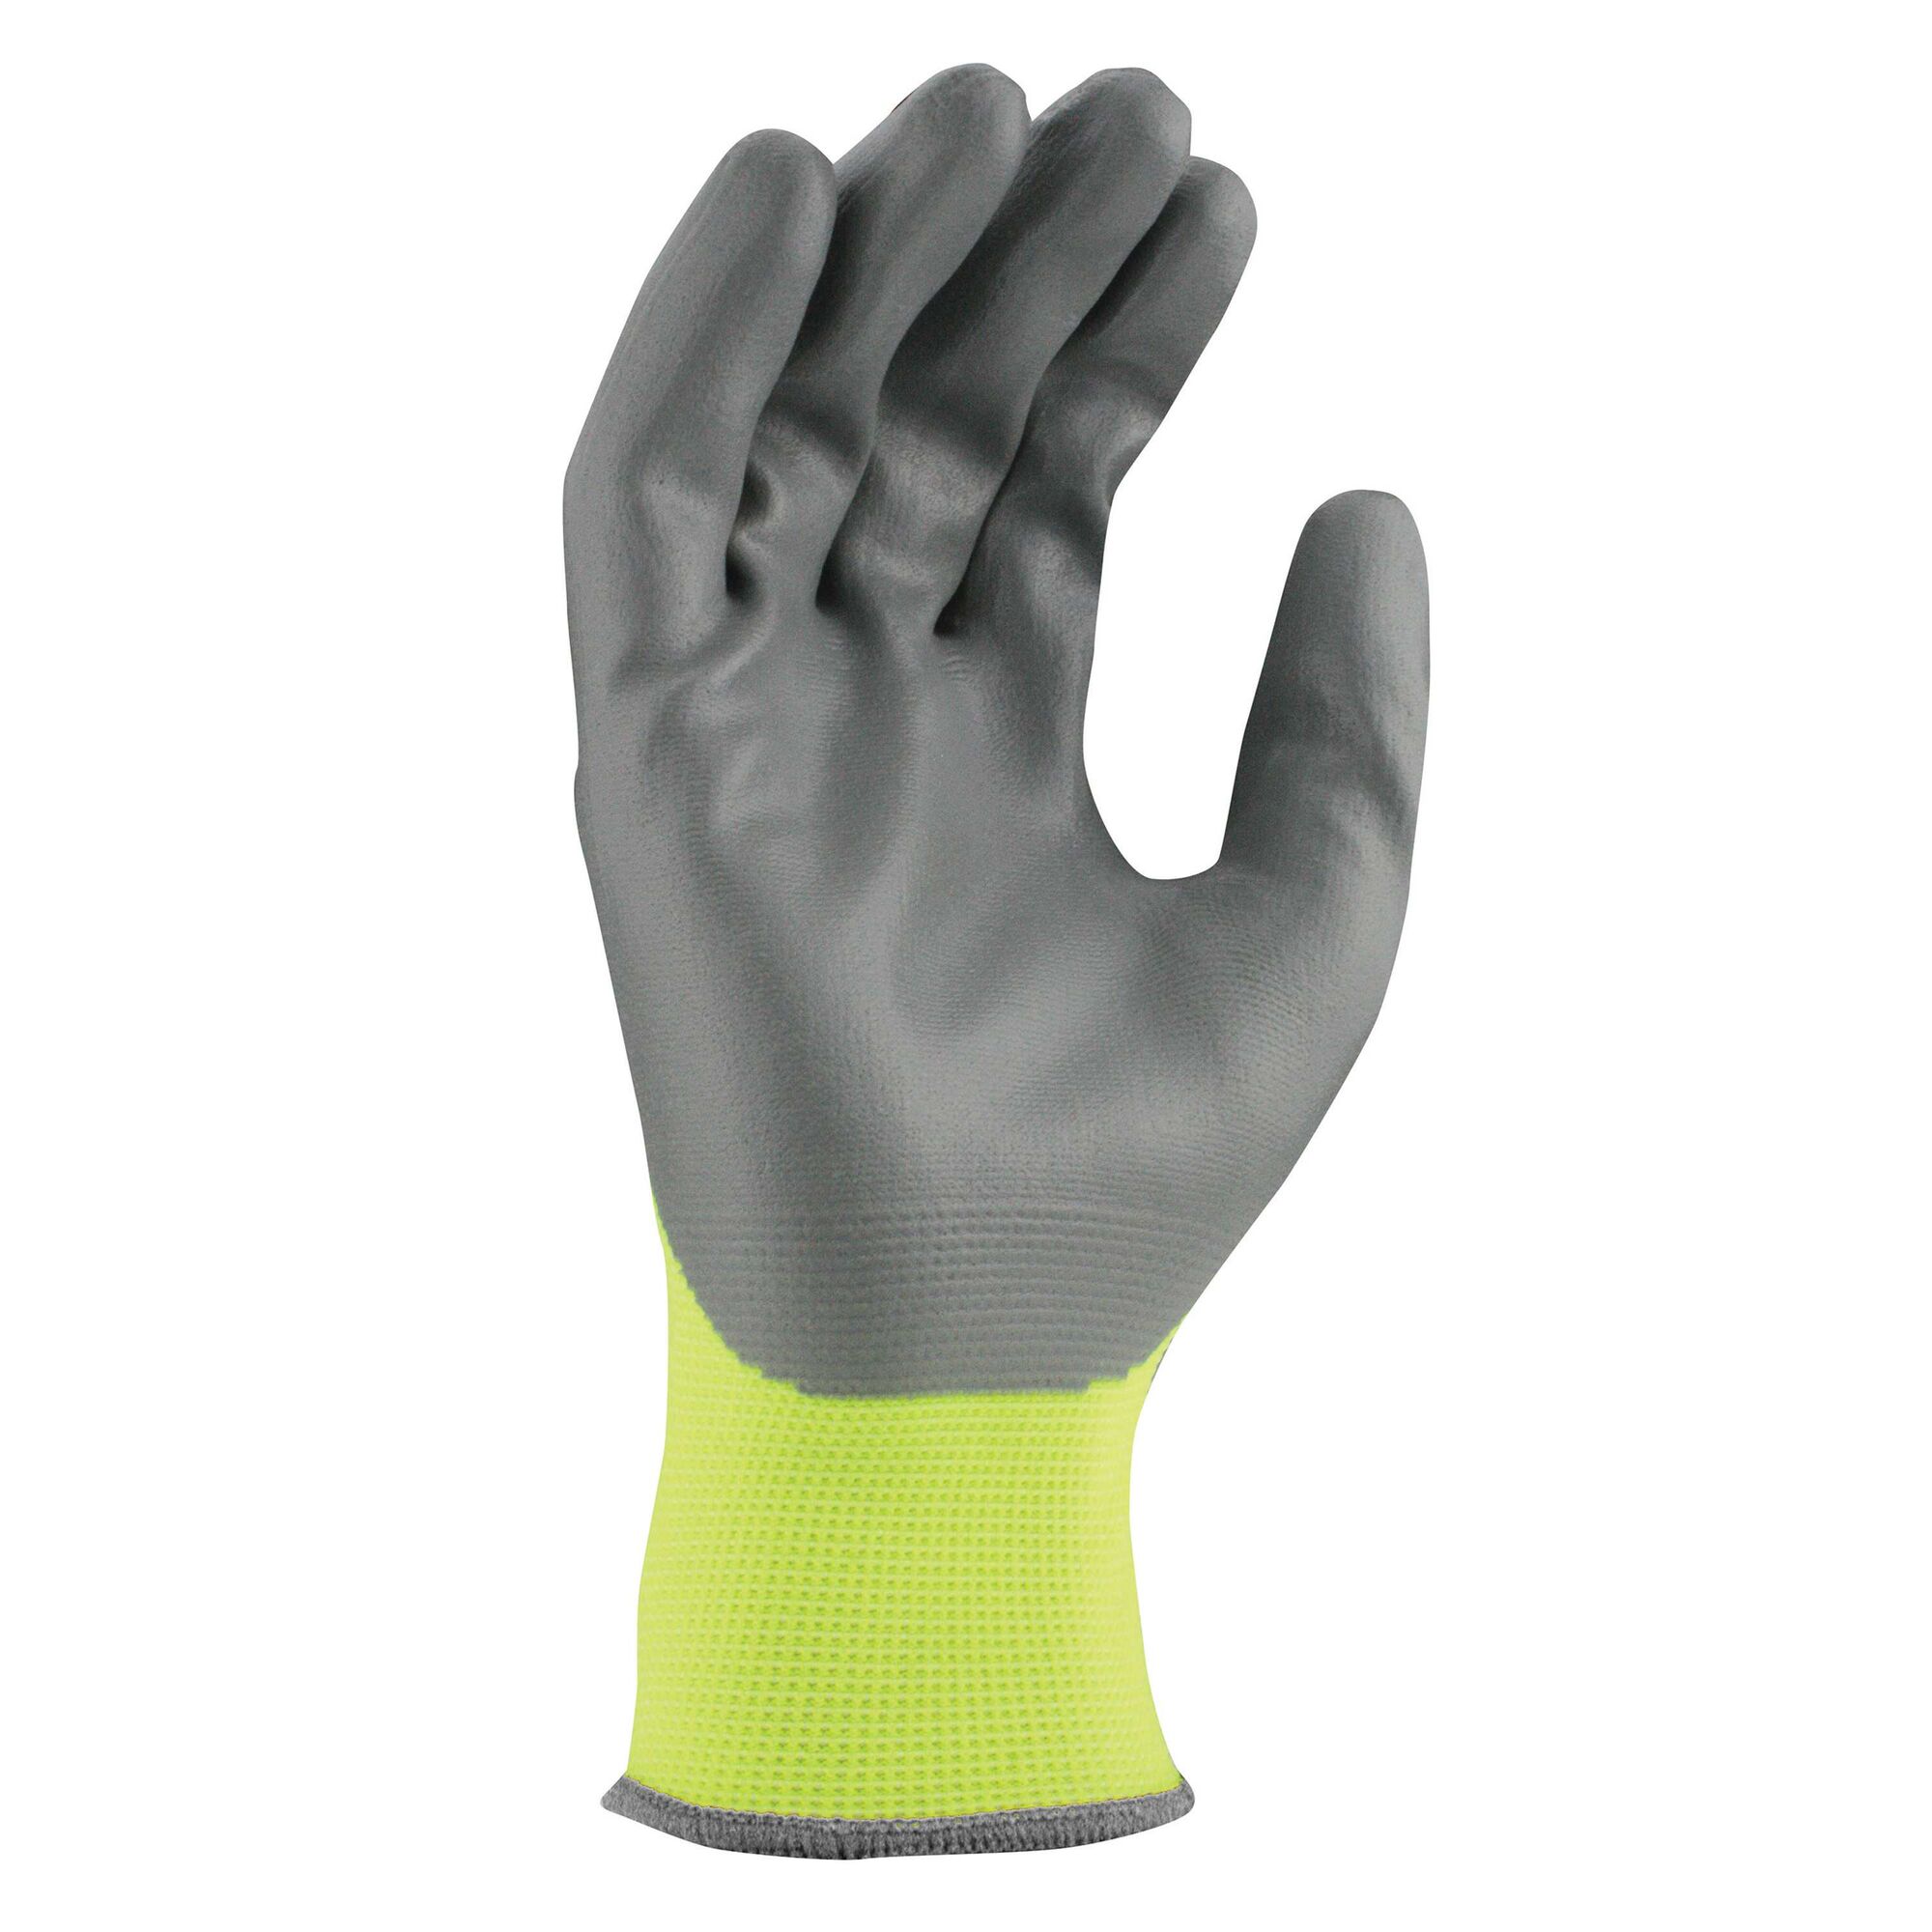 High visibility foam nitrile grip glove.